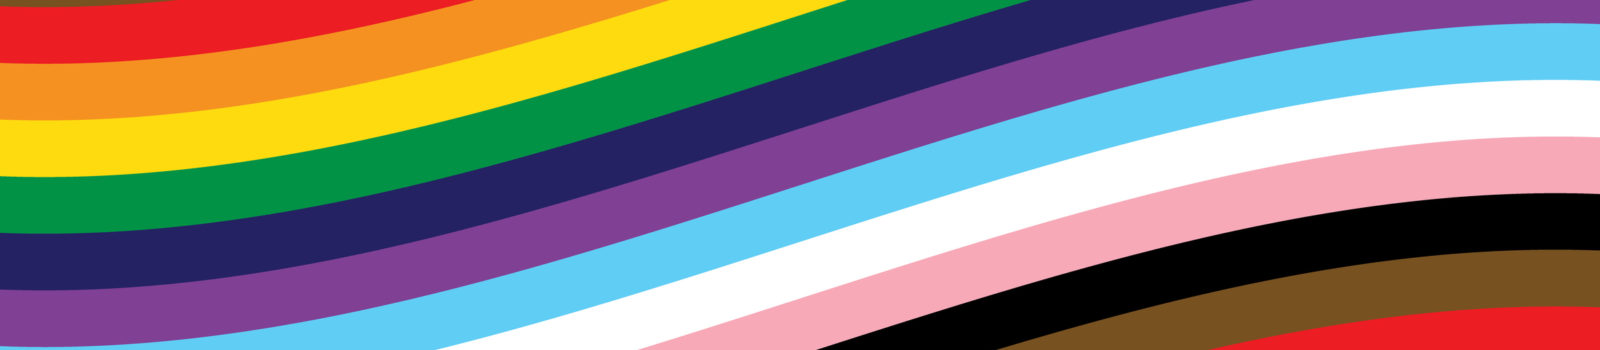 LGBTQIA Rainbow Pride Flag Striped Background